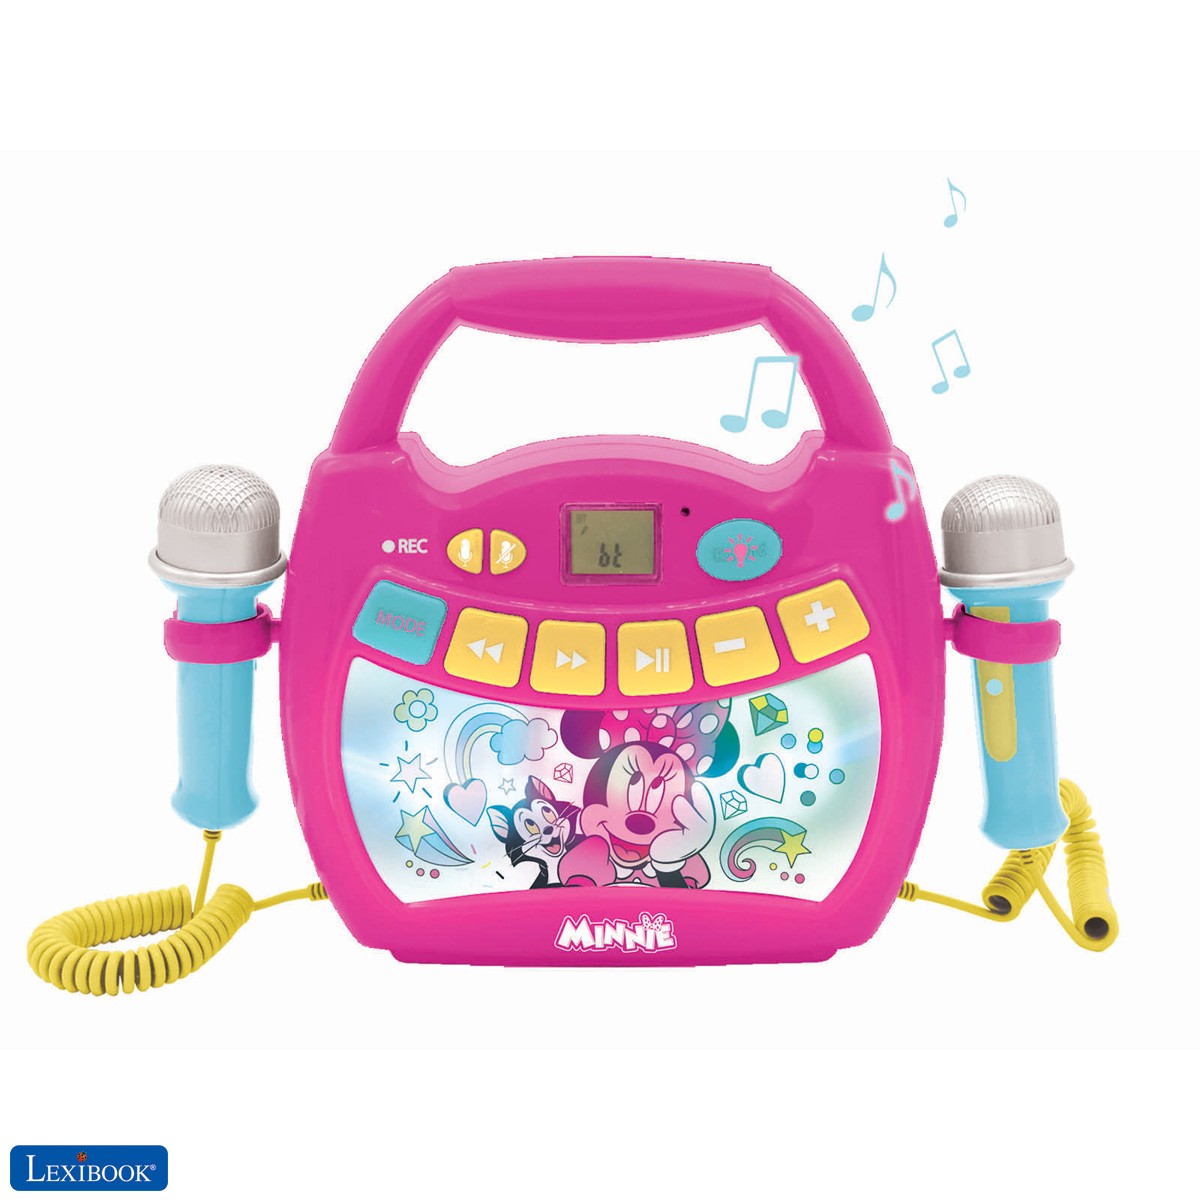 Disney Minnie - Portable karaoke digital player for kids